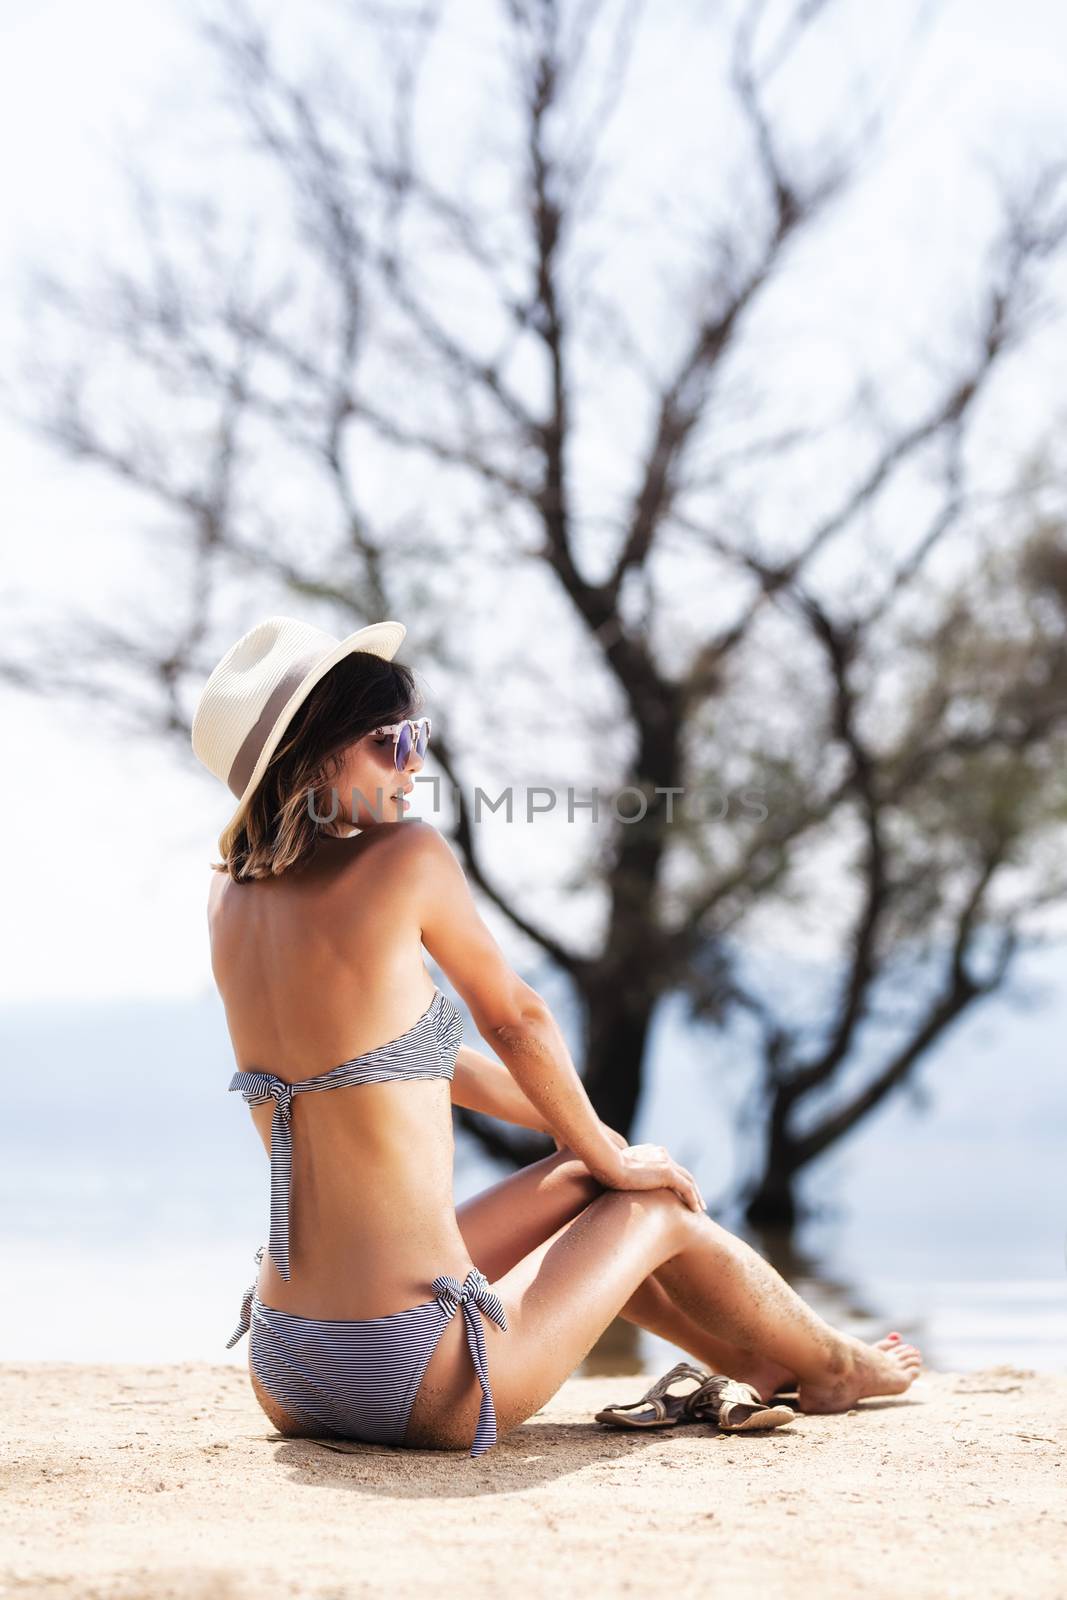 girl sunbathing on a beach by kokimk